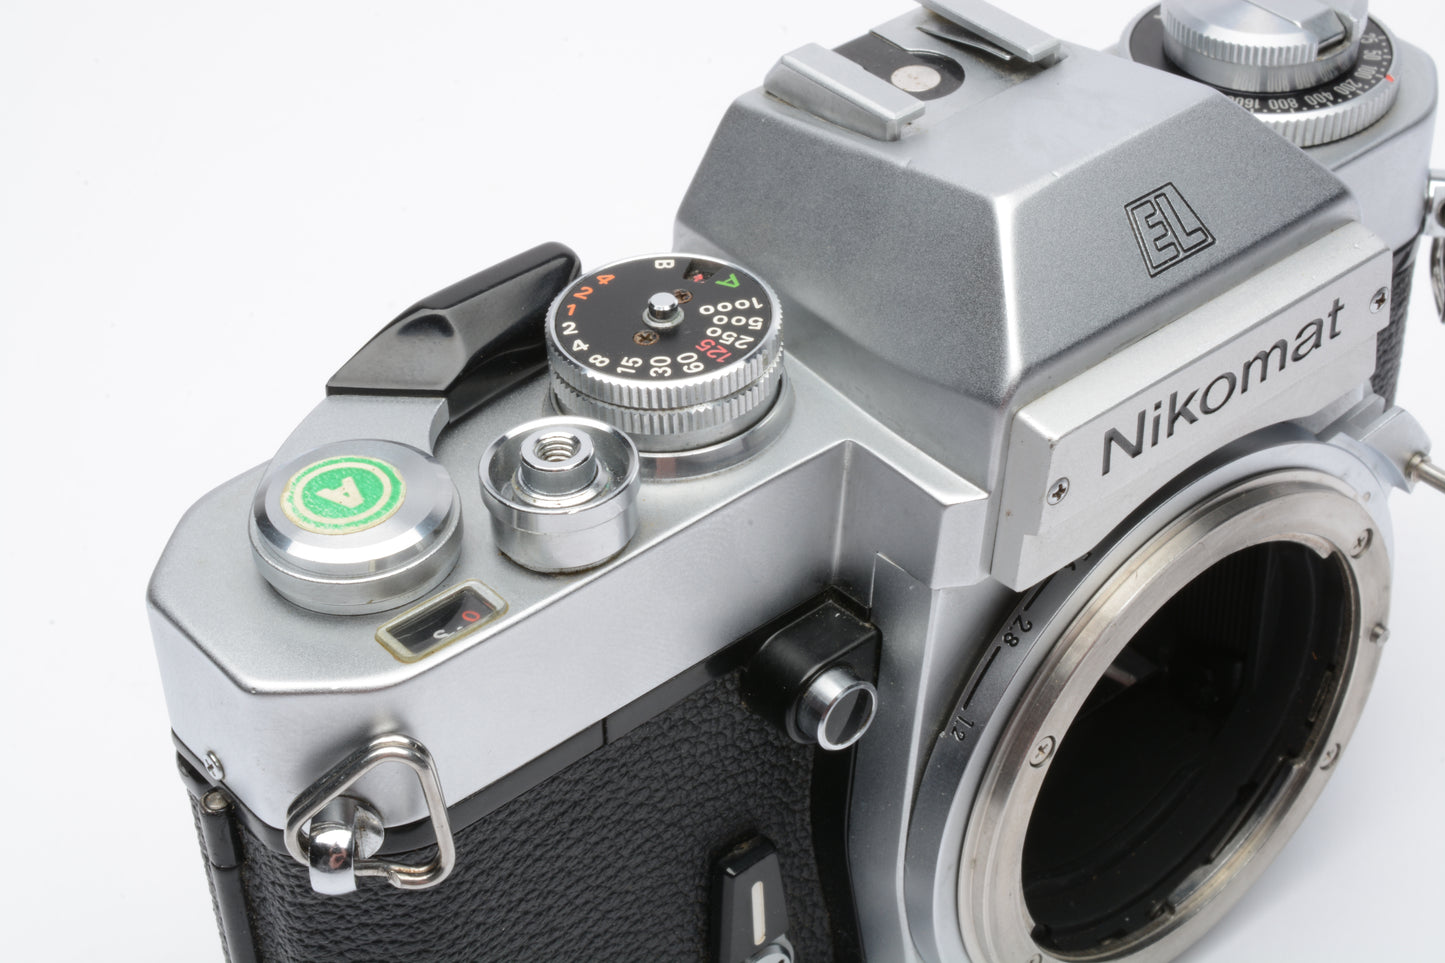 Nikon Nikomat EL 35mm SLR Chrome Body, New seals, very clean